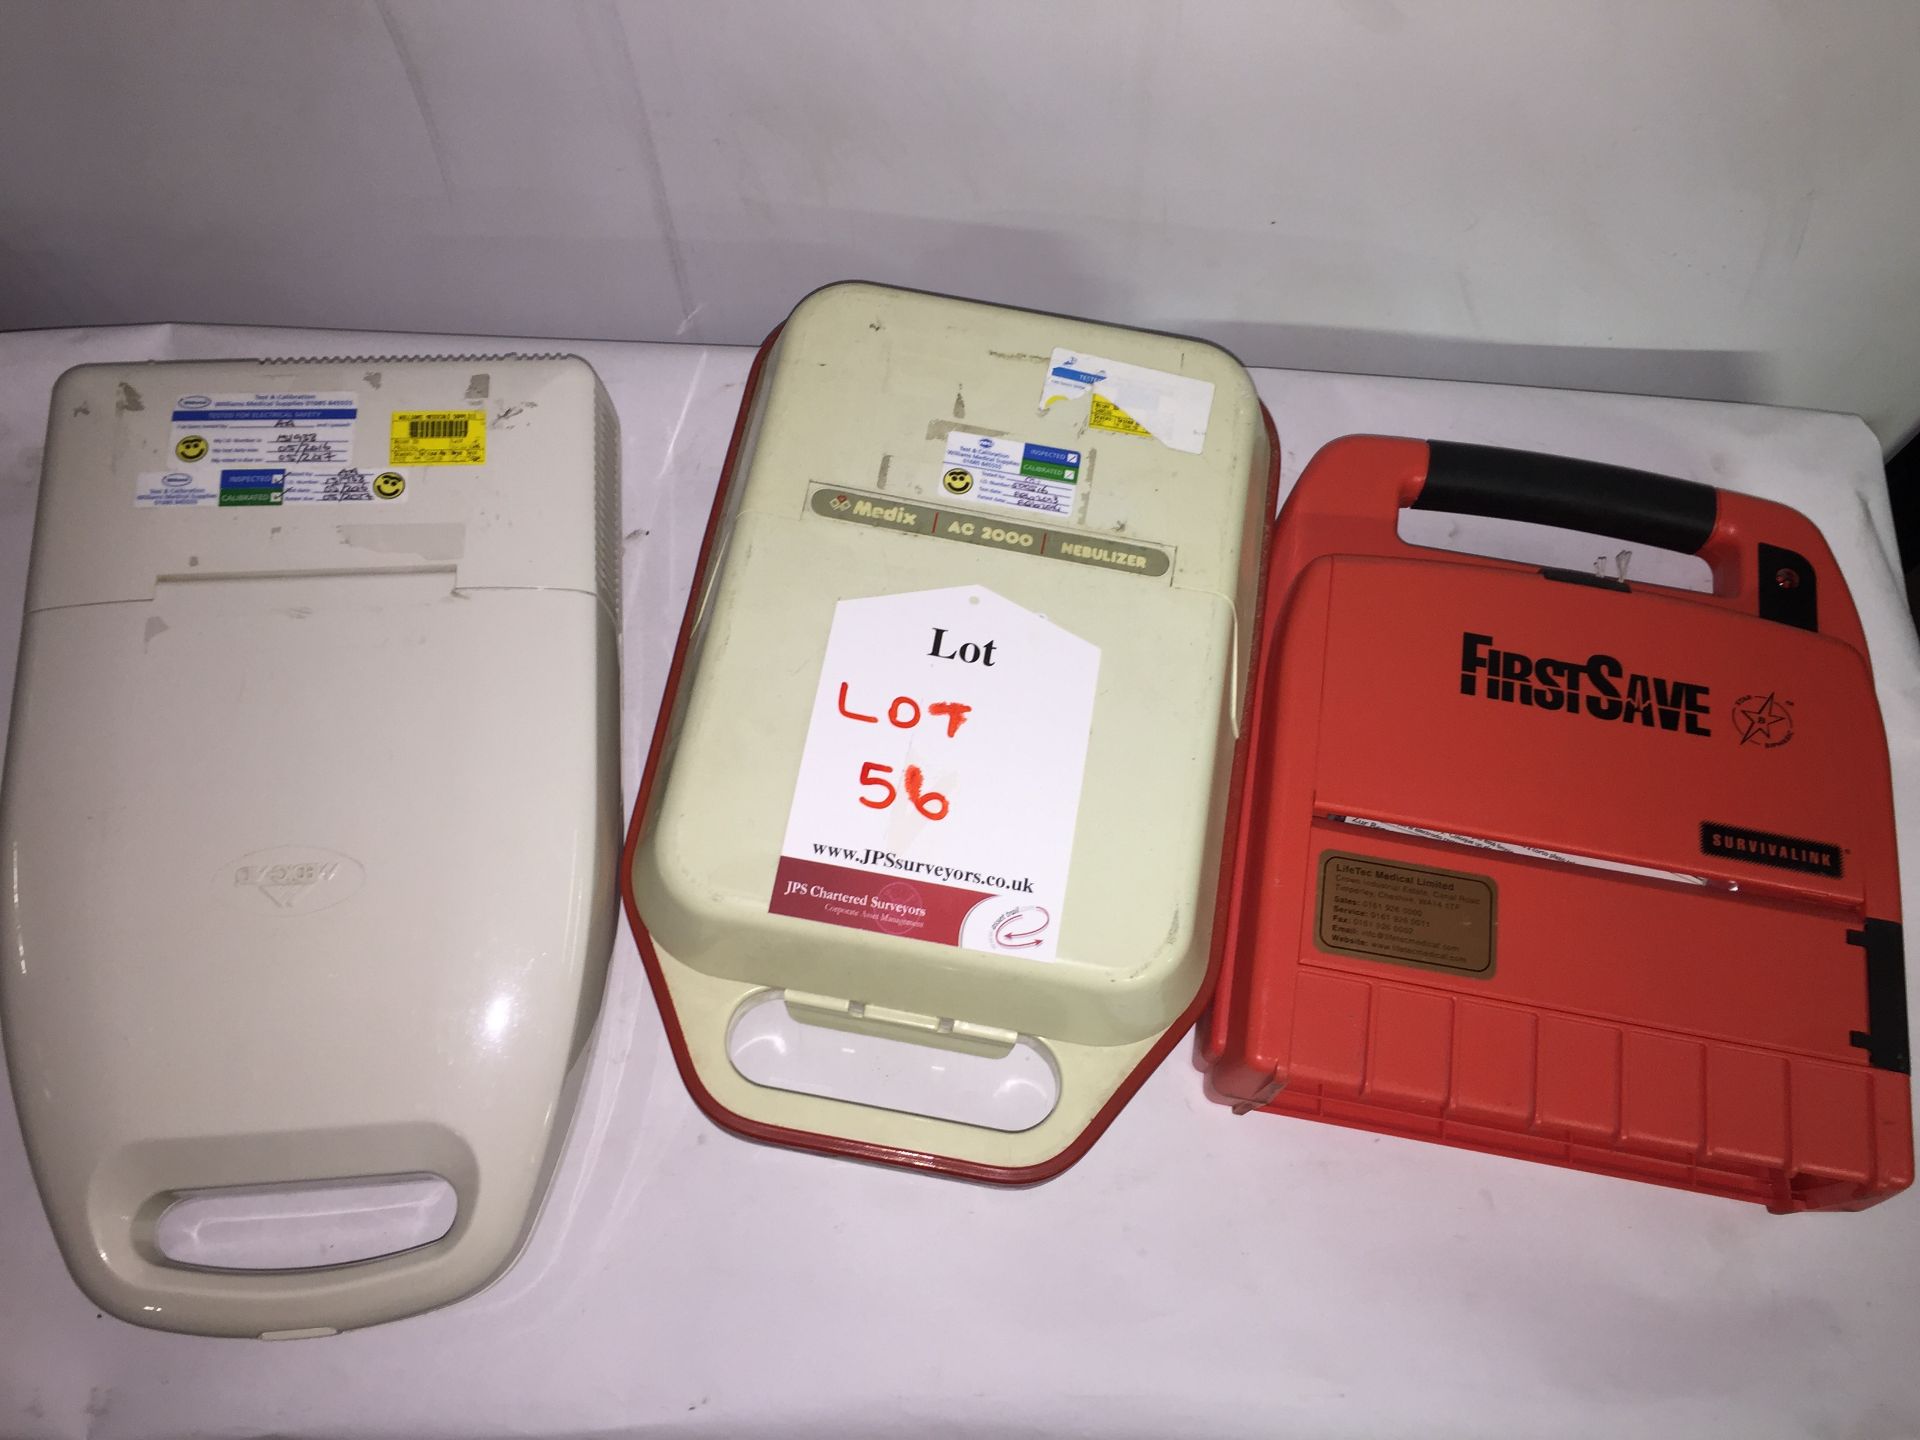 Medic-aid, Portaneb | Medix AC 2000 Nebulizer | First Save, Survivalink, Model: 9200 - Image 2 of 2